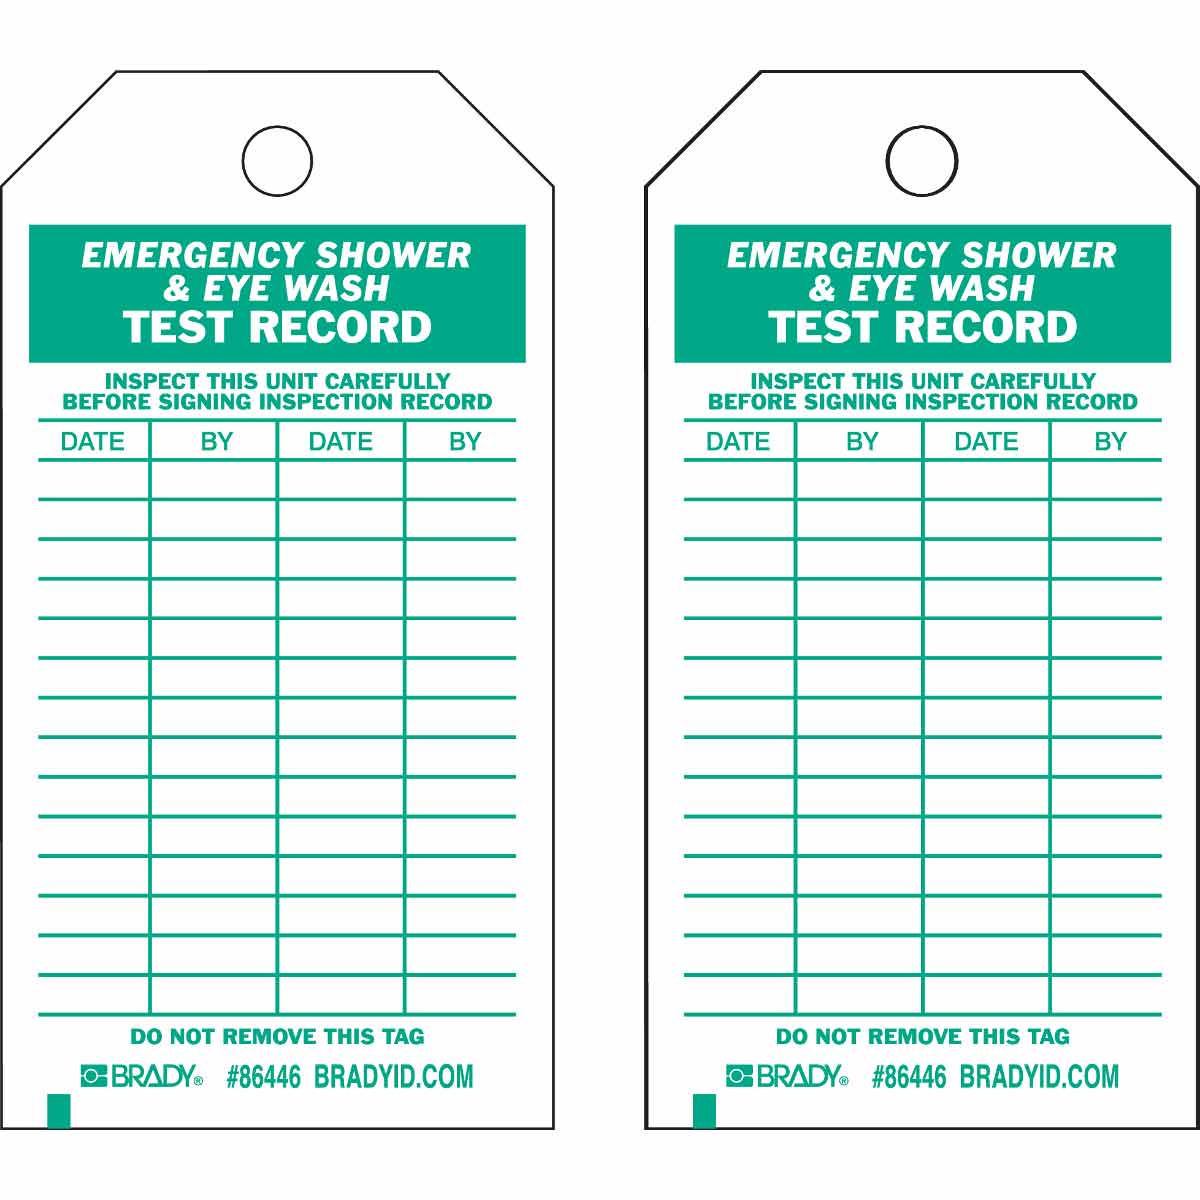 Brady Inspection Tags Emergency Shower And Eye Wash Test Record 86446 Bradyid Com